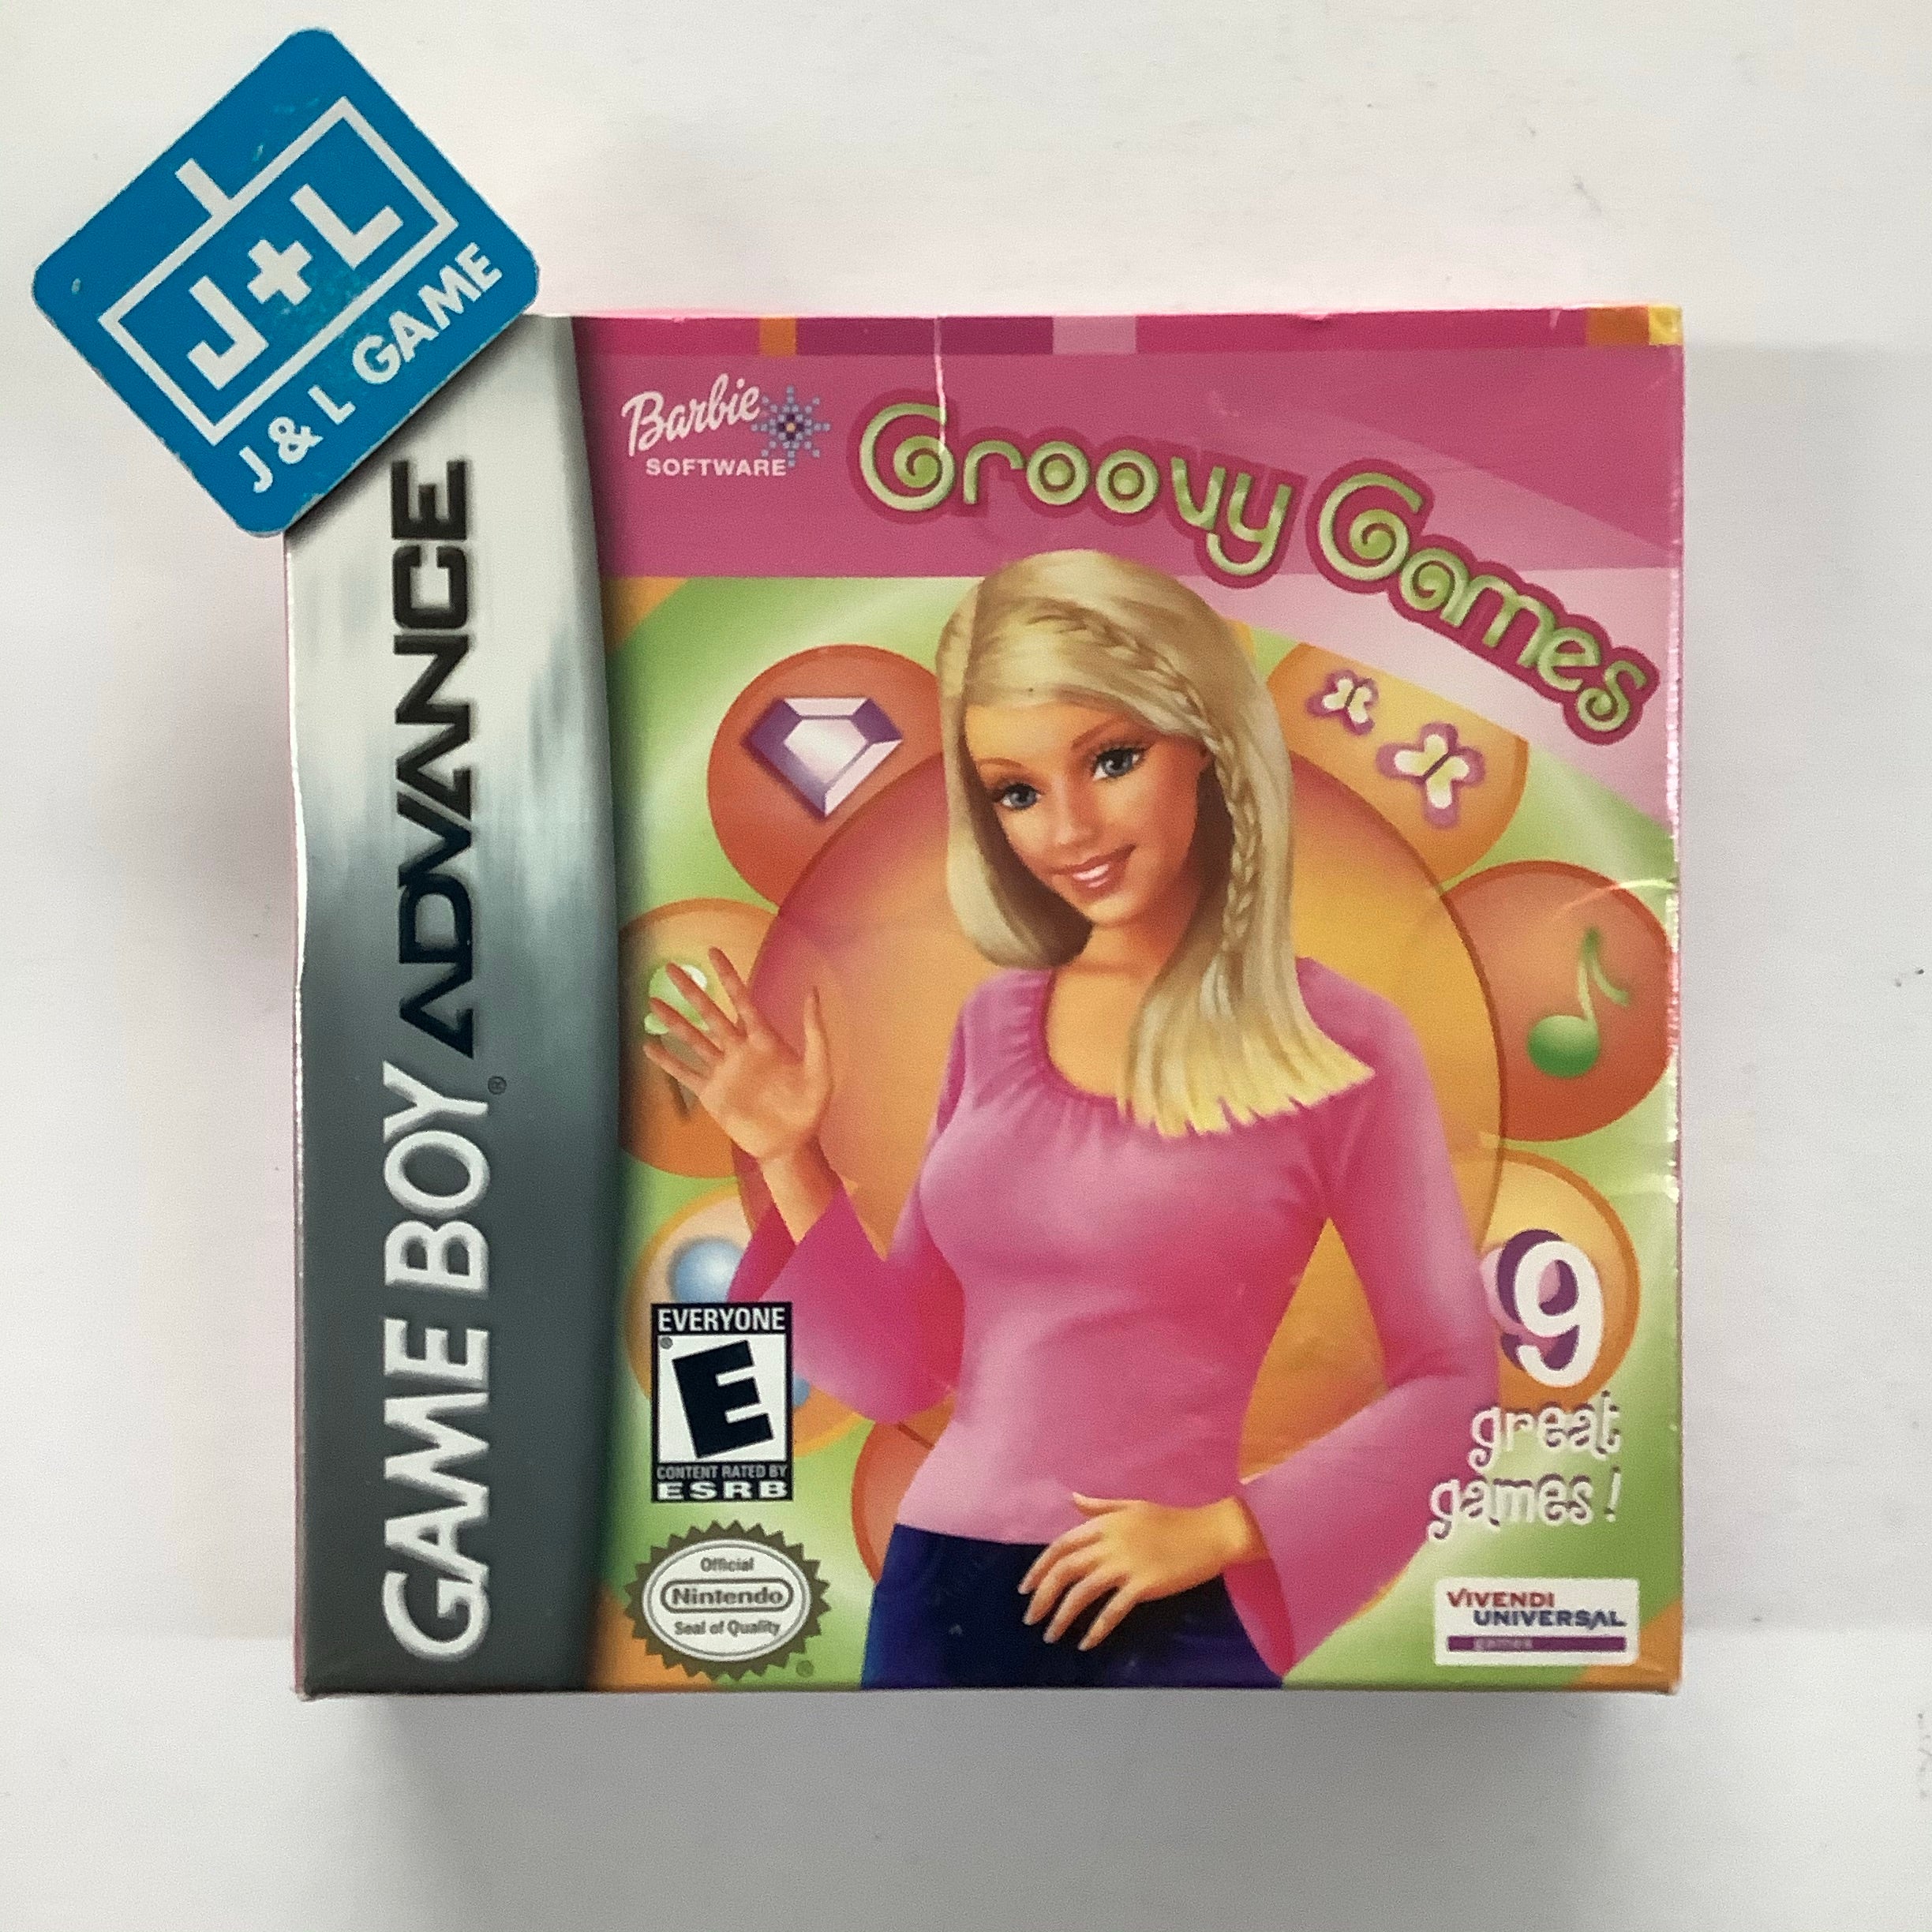 Barbie Software: Groovy Games - (GBA) Game Boy Advance Video Games VU Games   